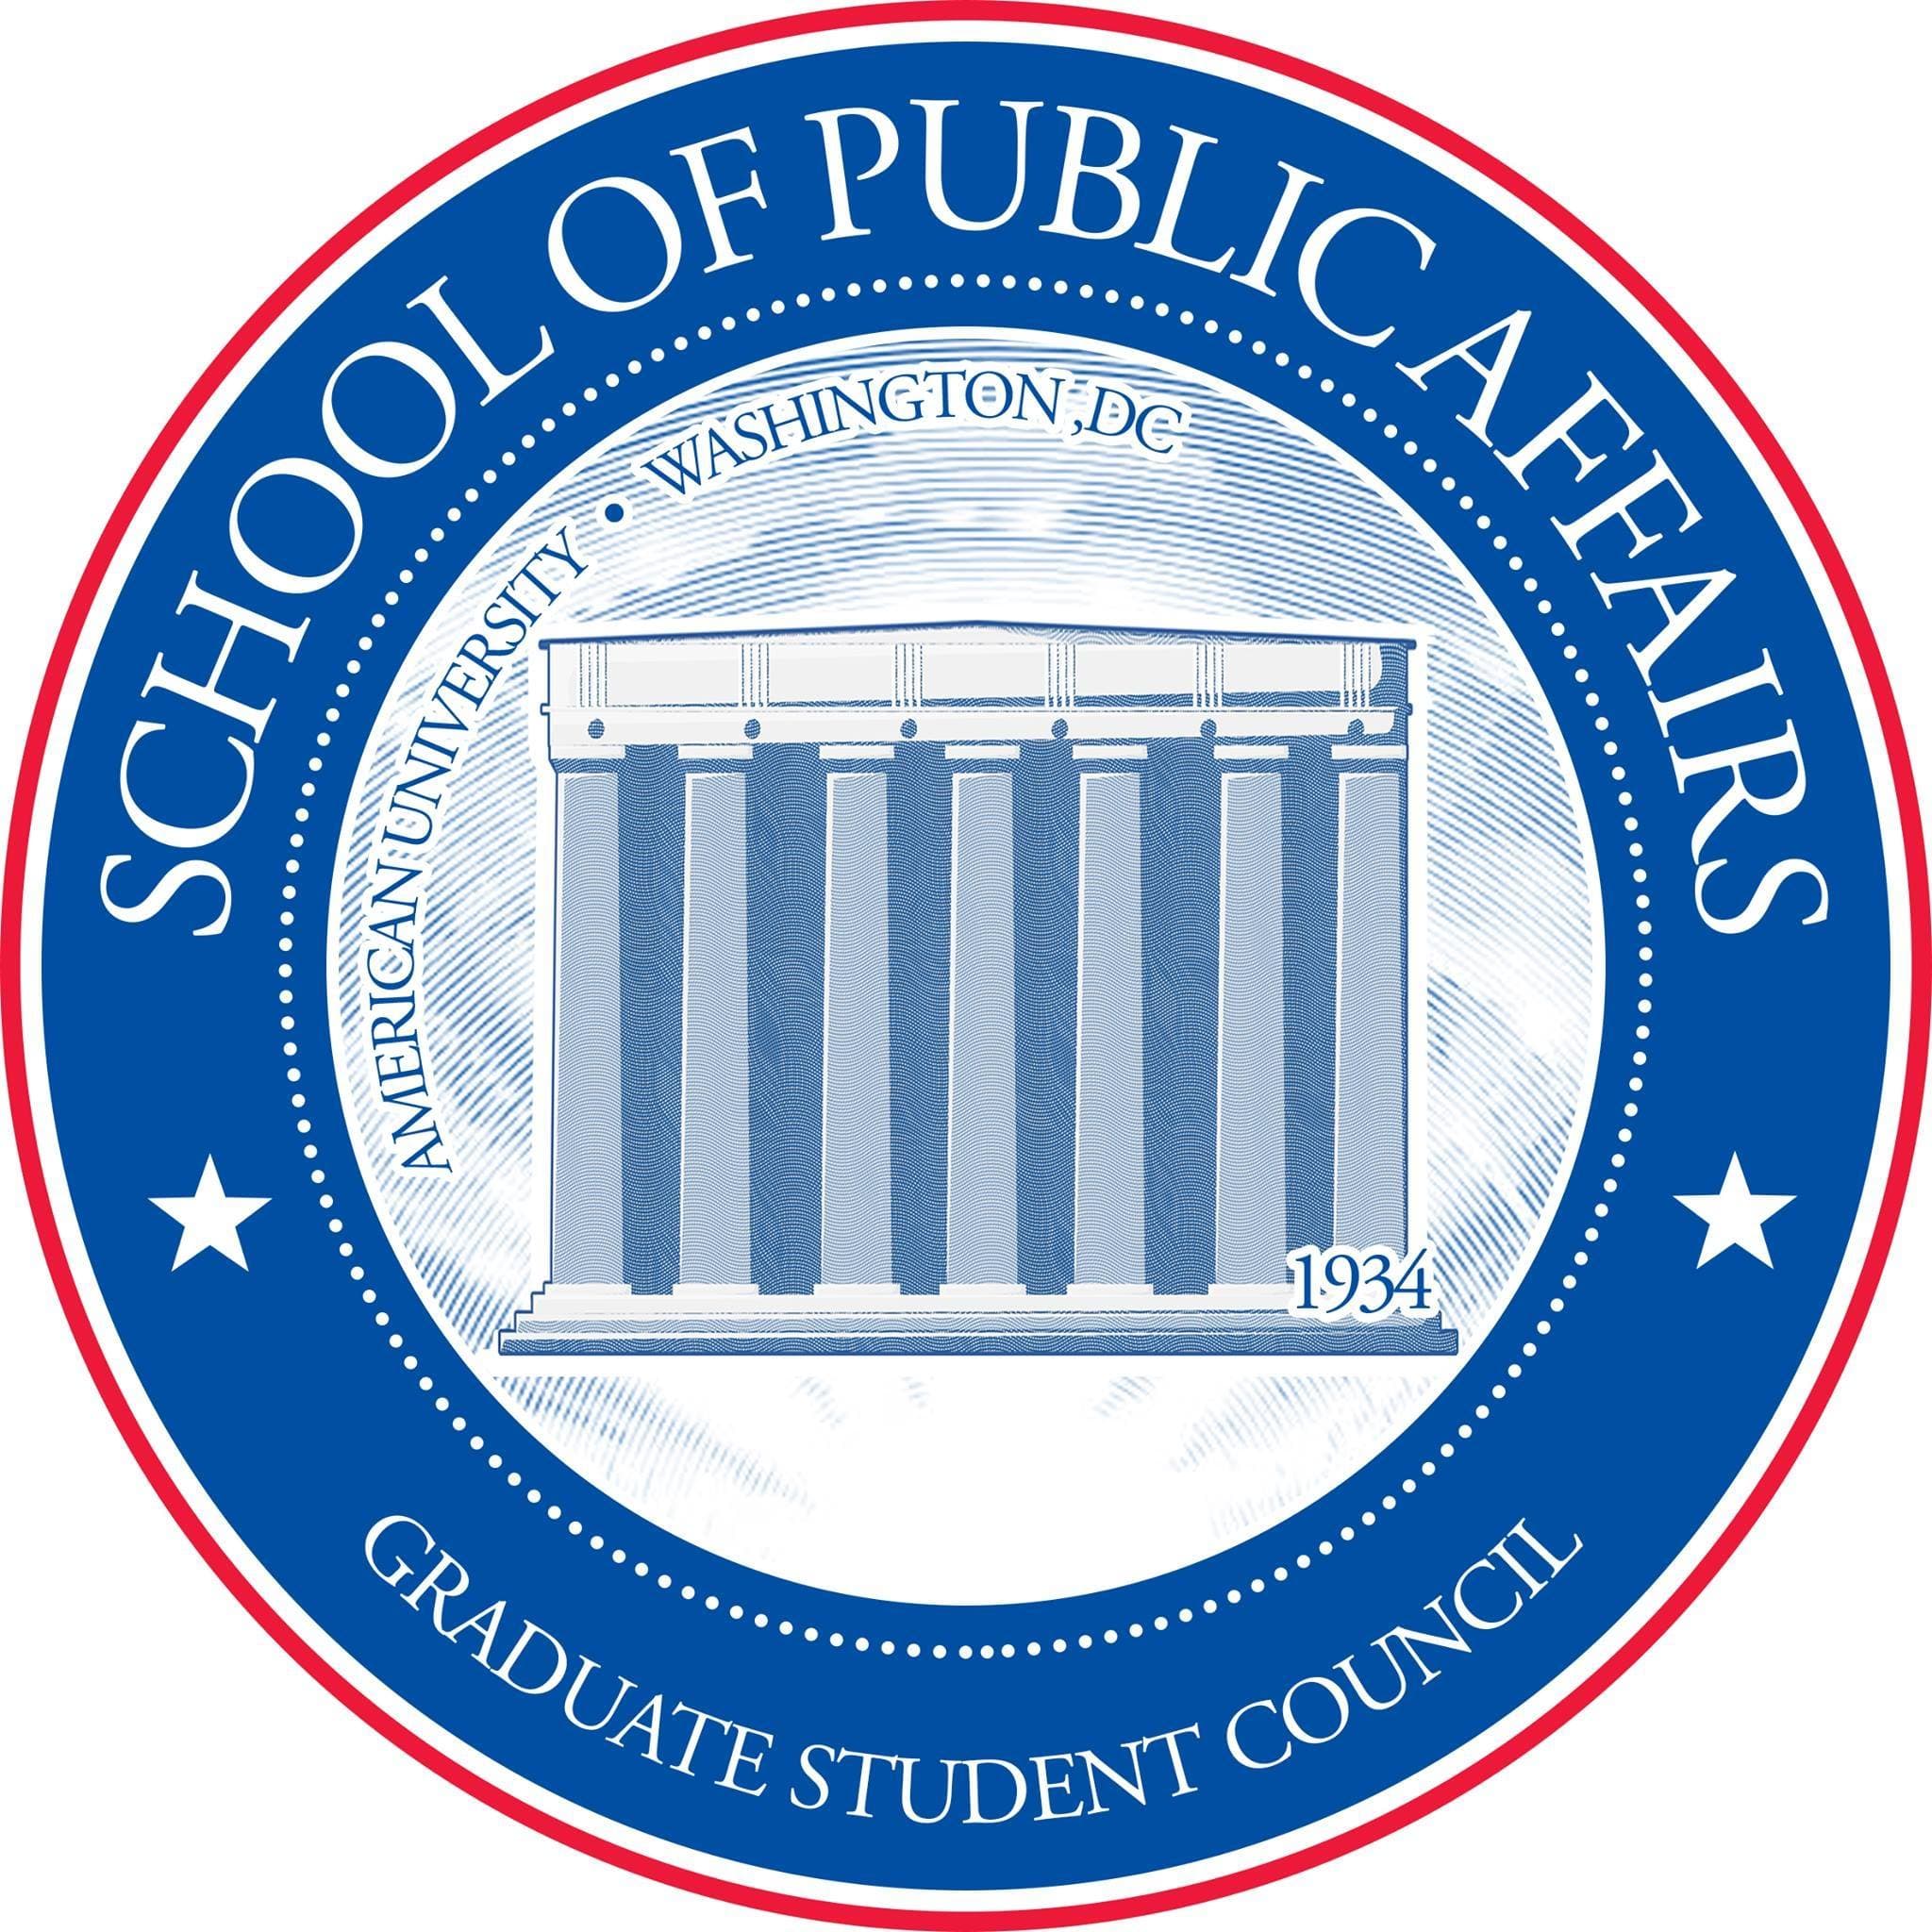 School of Public Affairs. Graduate Student Council.